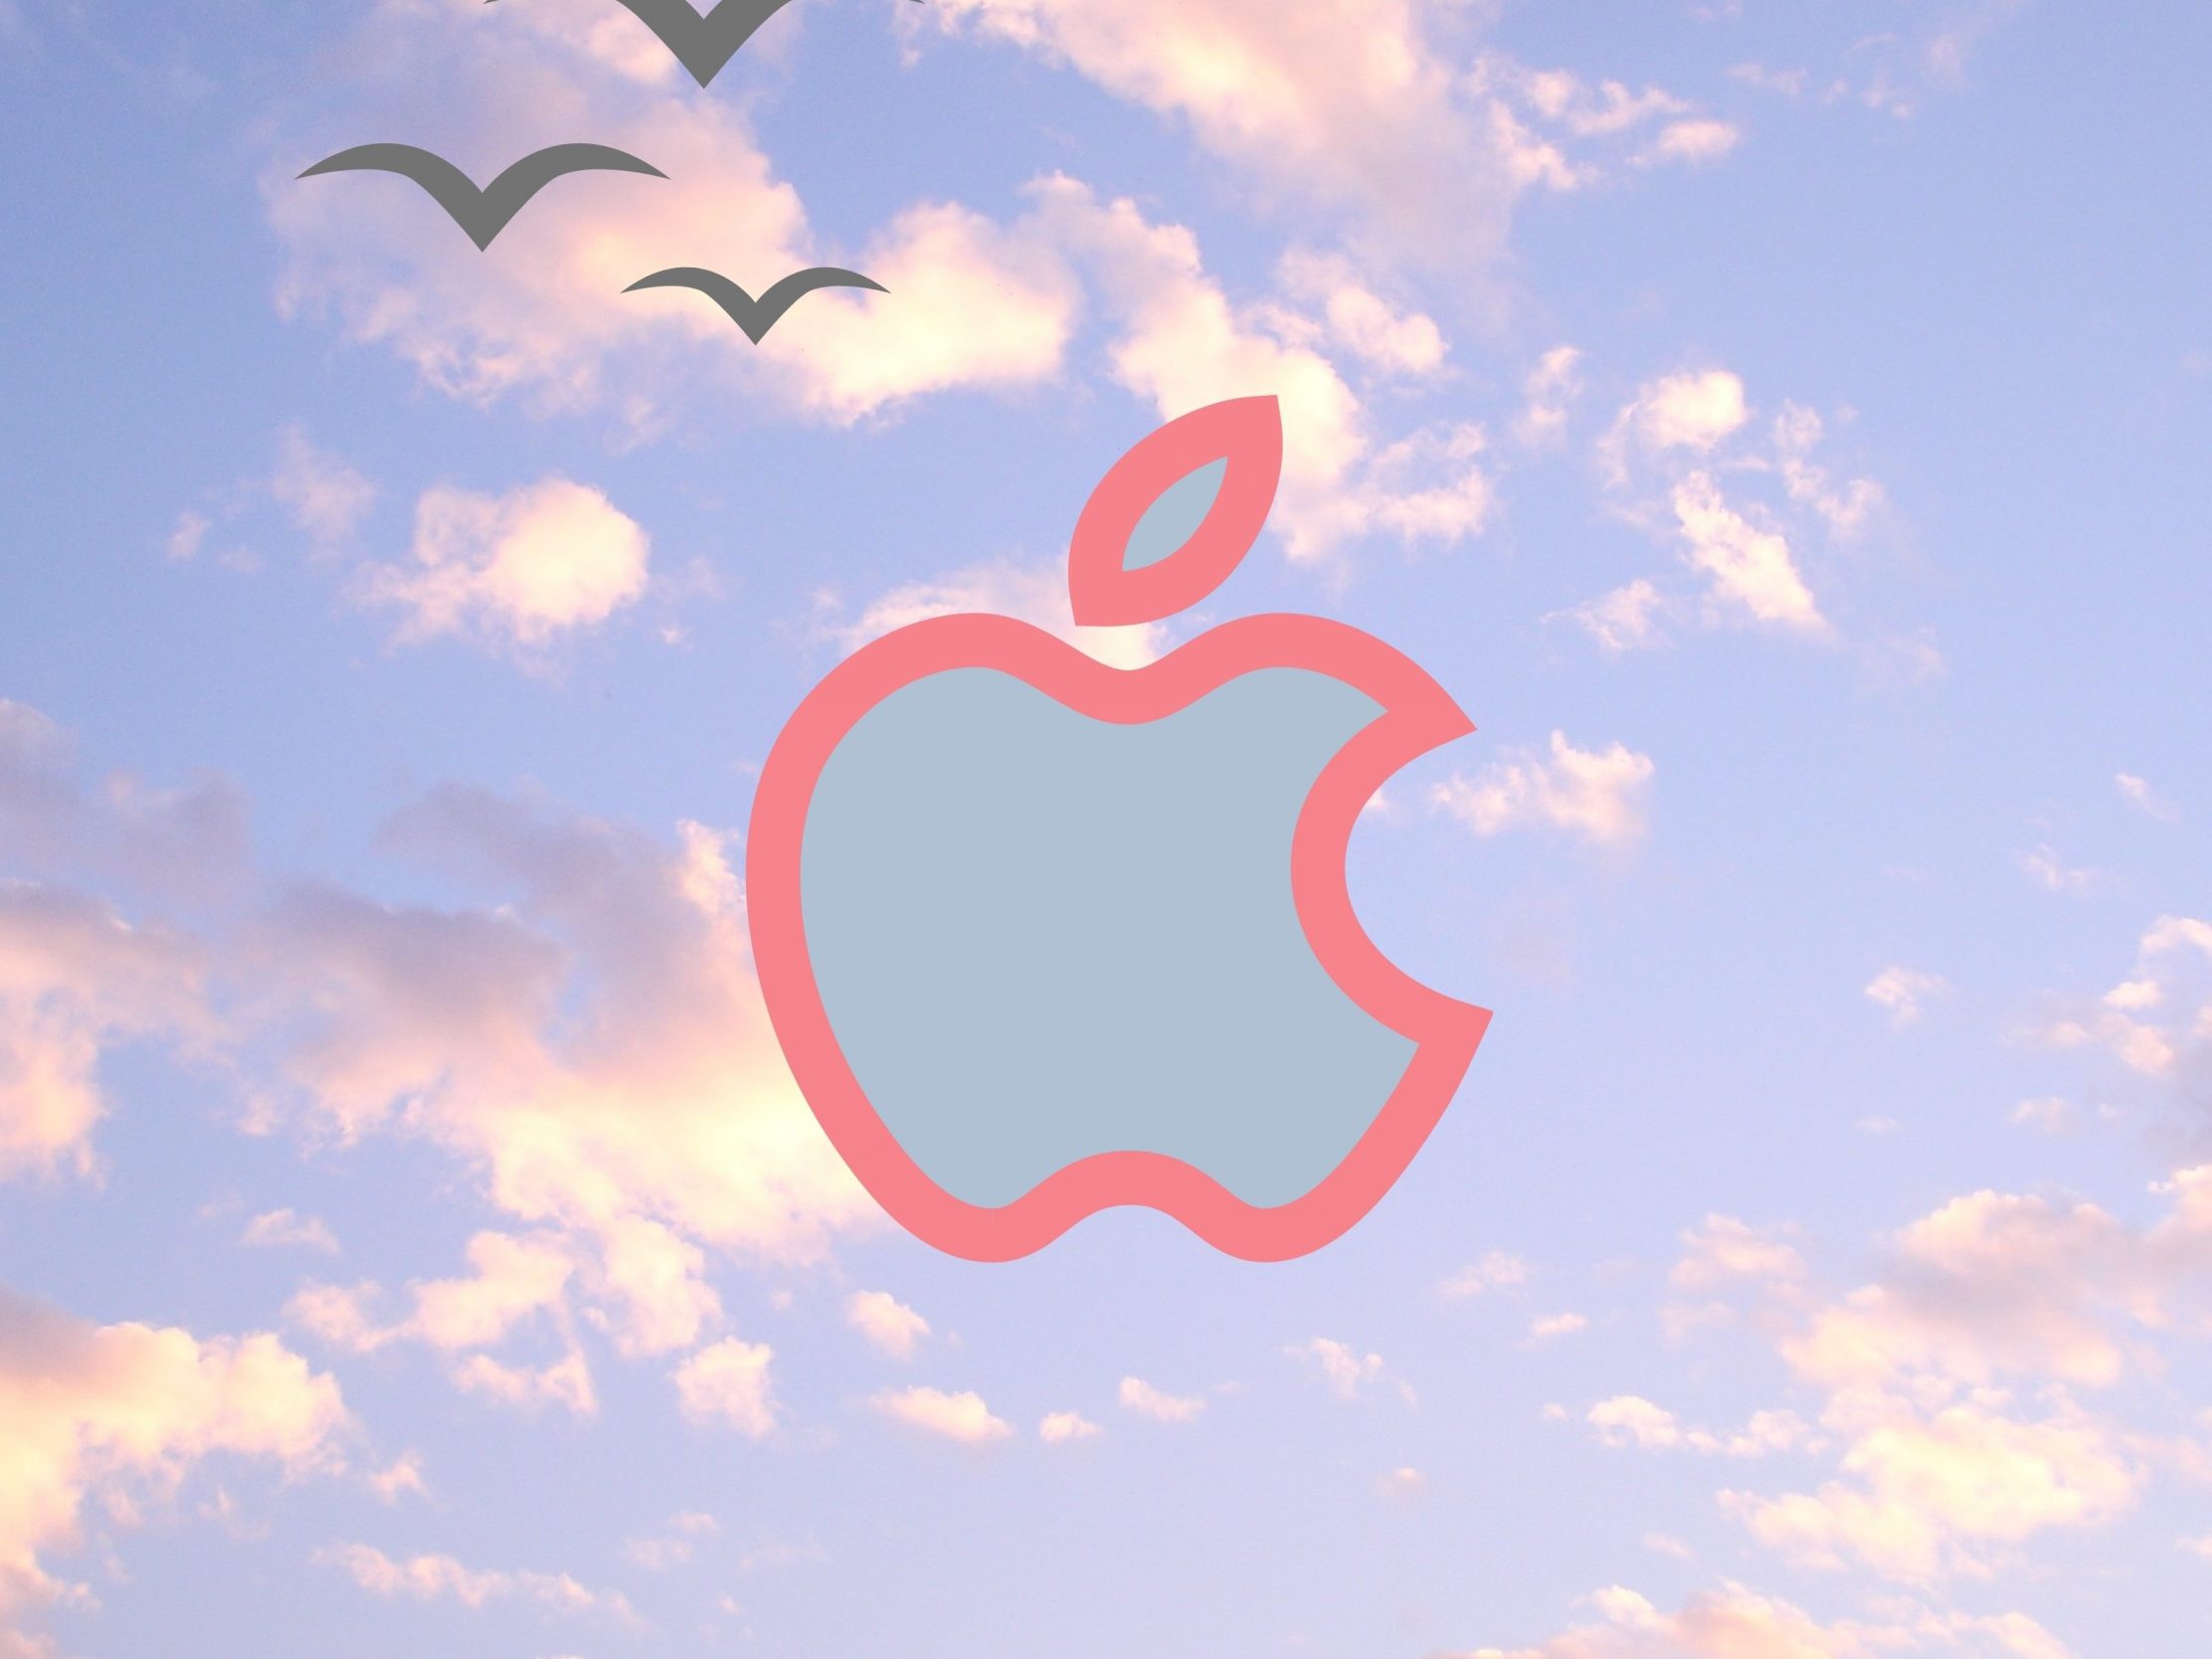 2224x1668 iPad Pro wallpapers Apple Logo Pink Blue Sky Clouds Birds iPad Wallpaper 2224x1668 pixels resolution